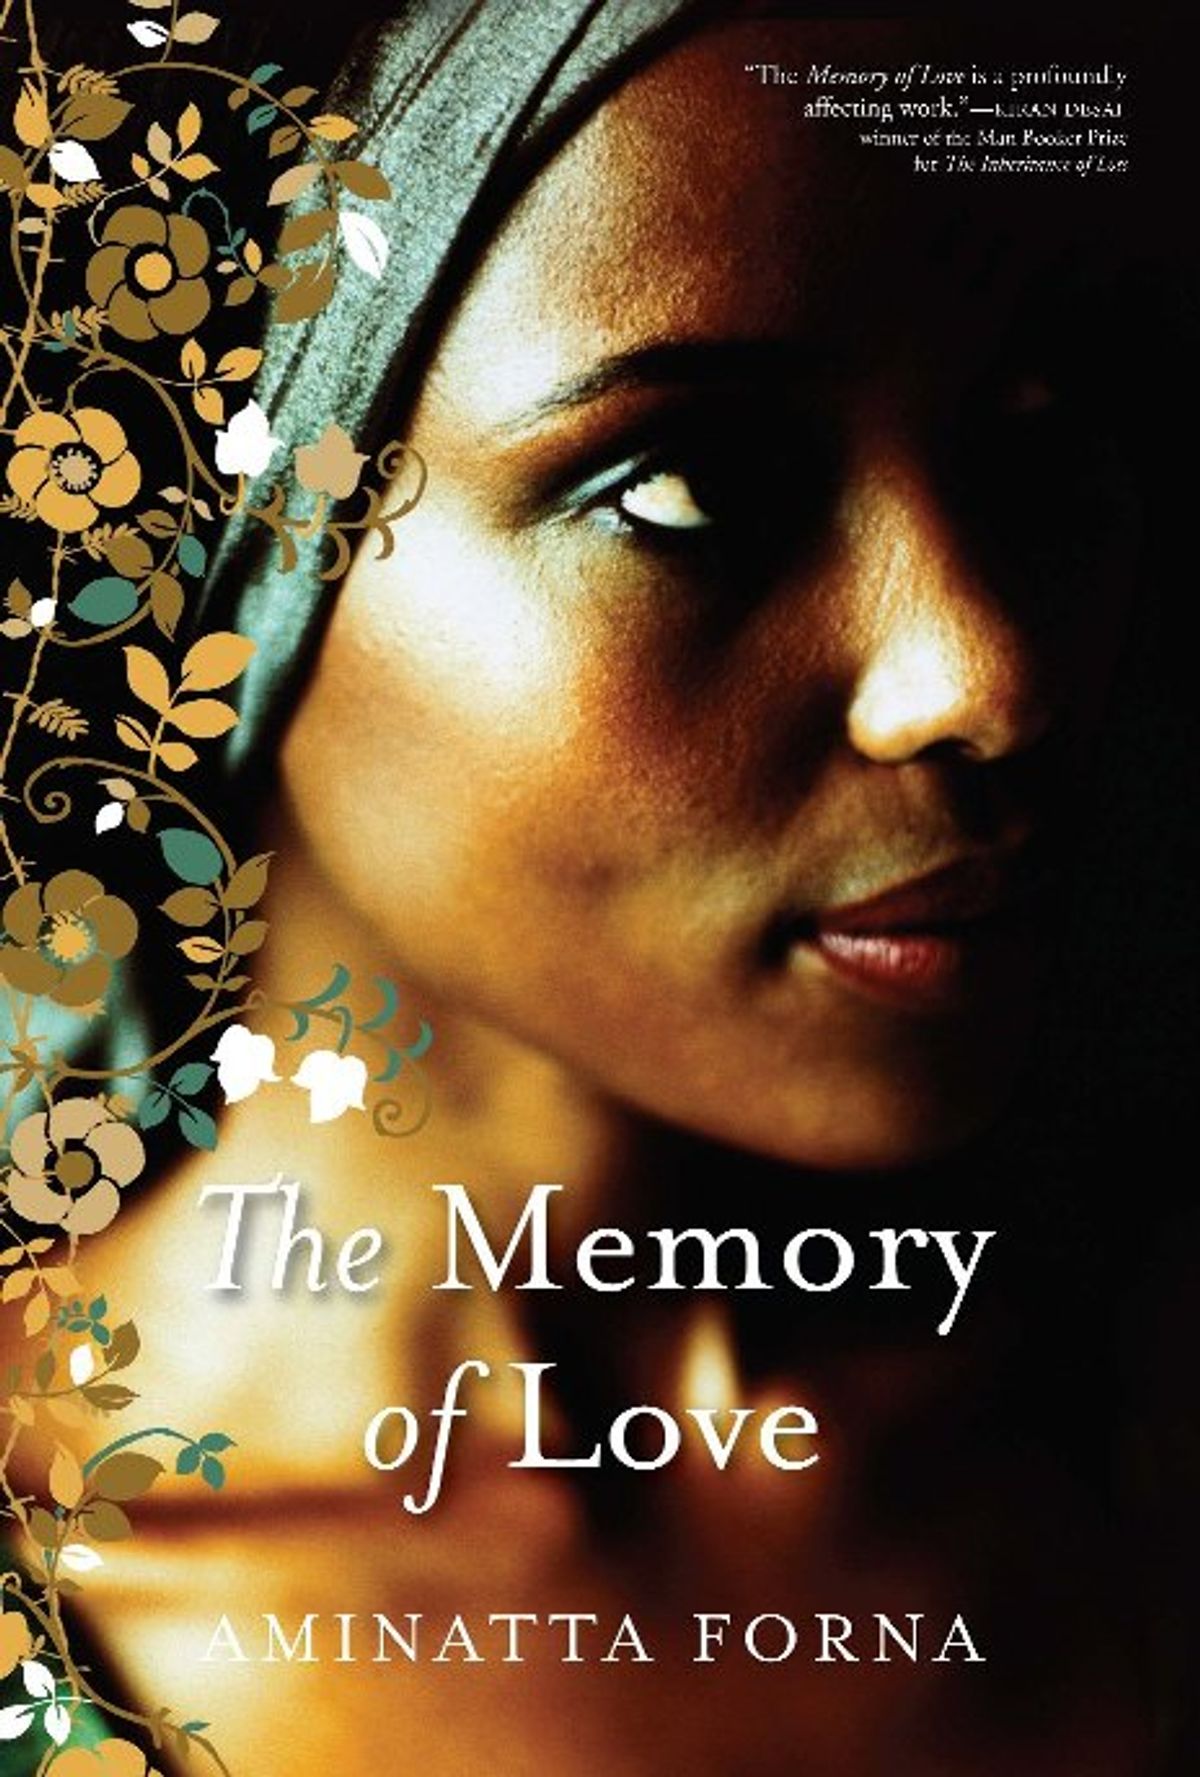 "The Memory of Love" by Aminatta Forna (Wendy)